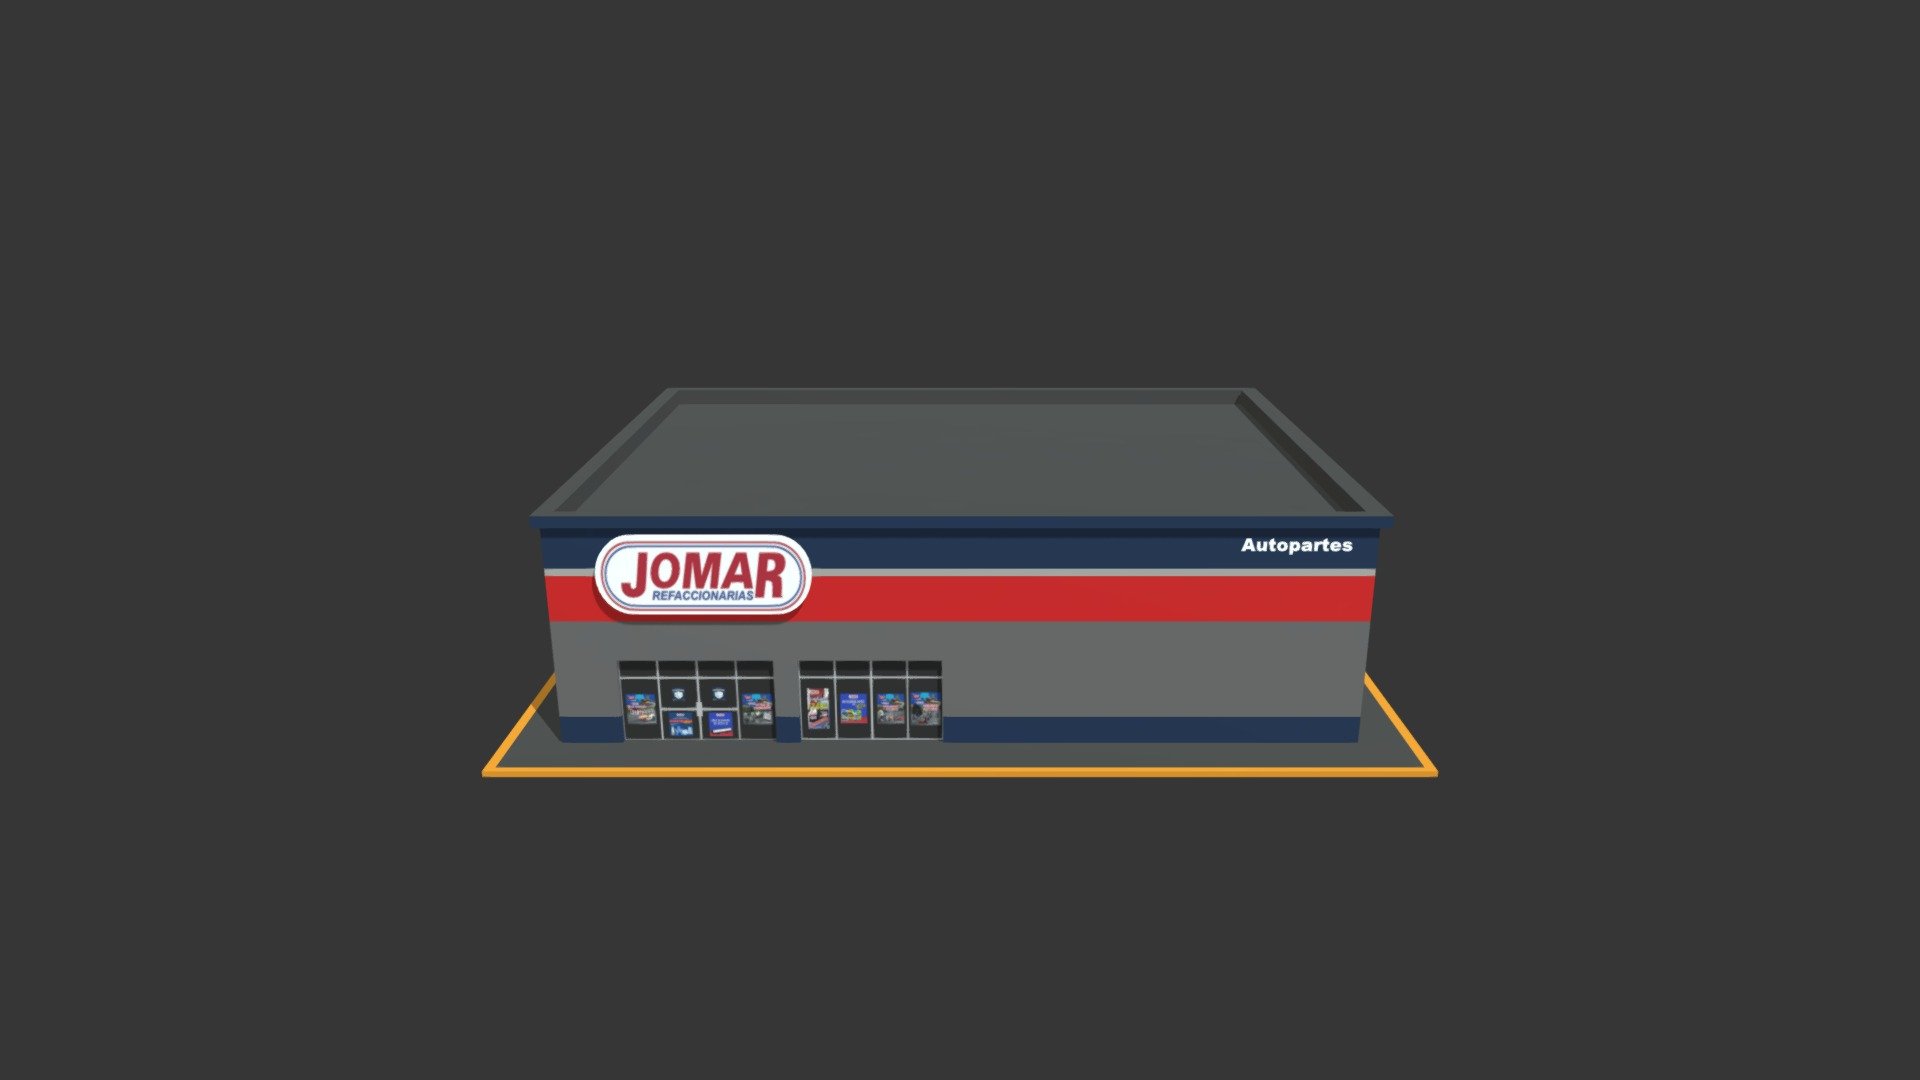 Asset creado para cities skylines - Jomar Refaccionaria (autoparts) - 3D model by checomx 3d model